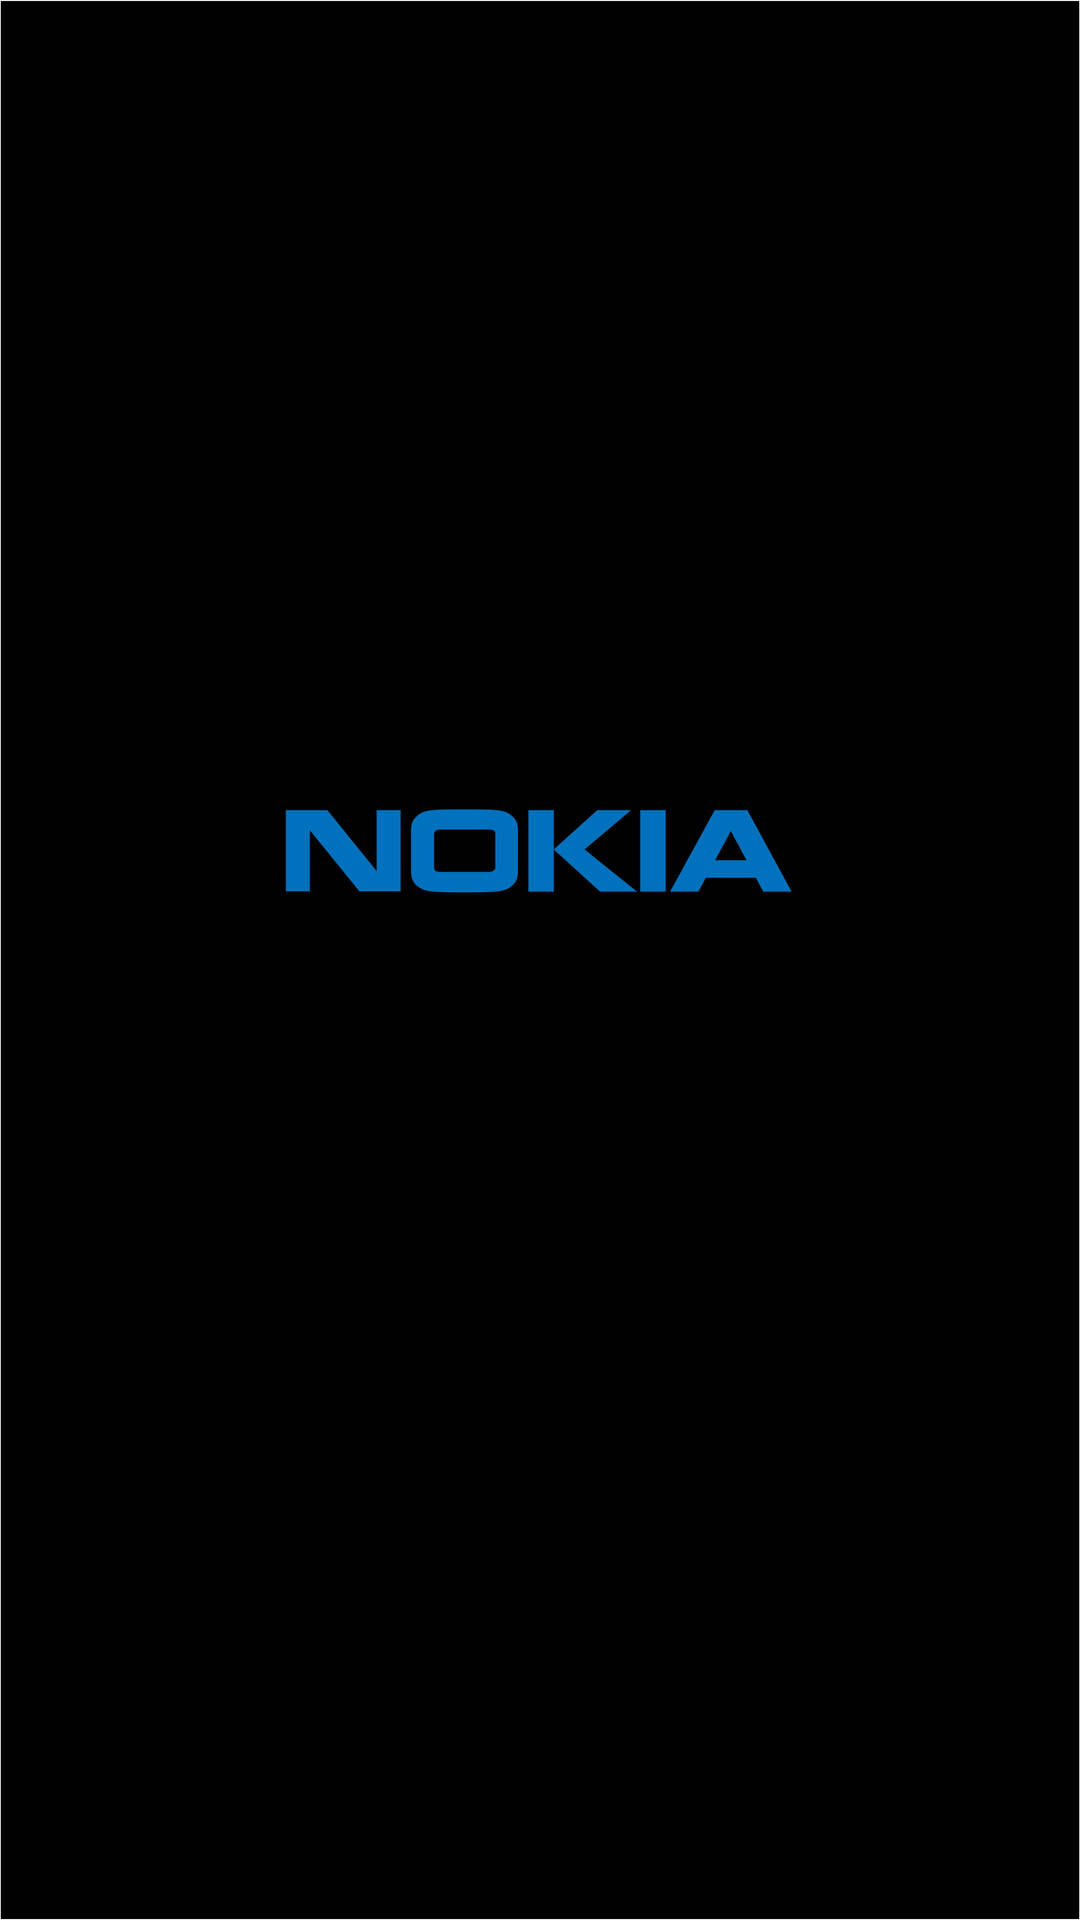 Nokia Wordmark Logo 8k Phone Picture